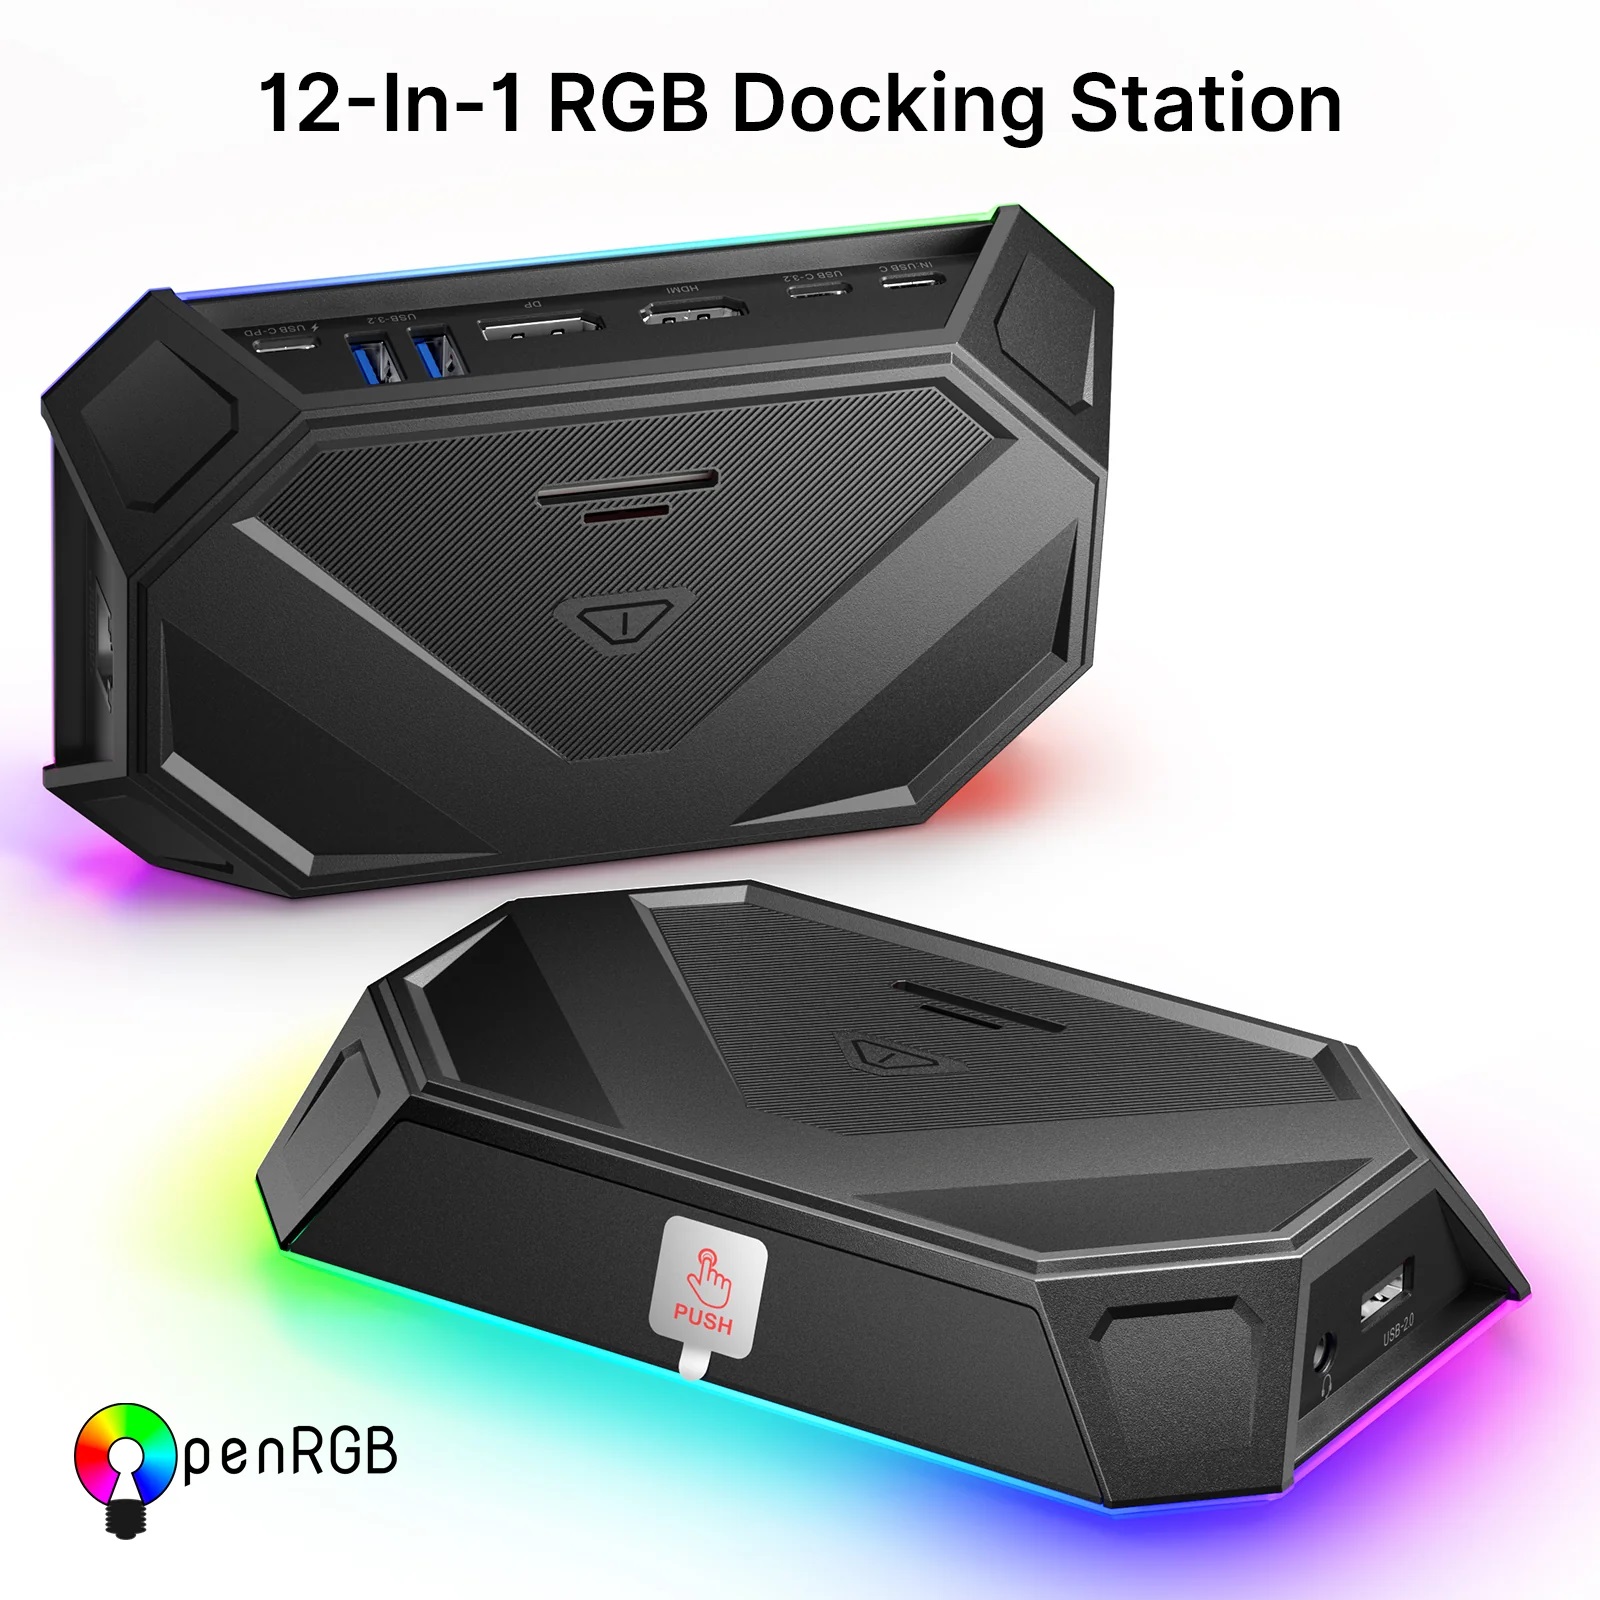 A dock for the Lenovo Legion Go: Jsaux RGB docking station review